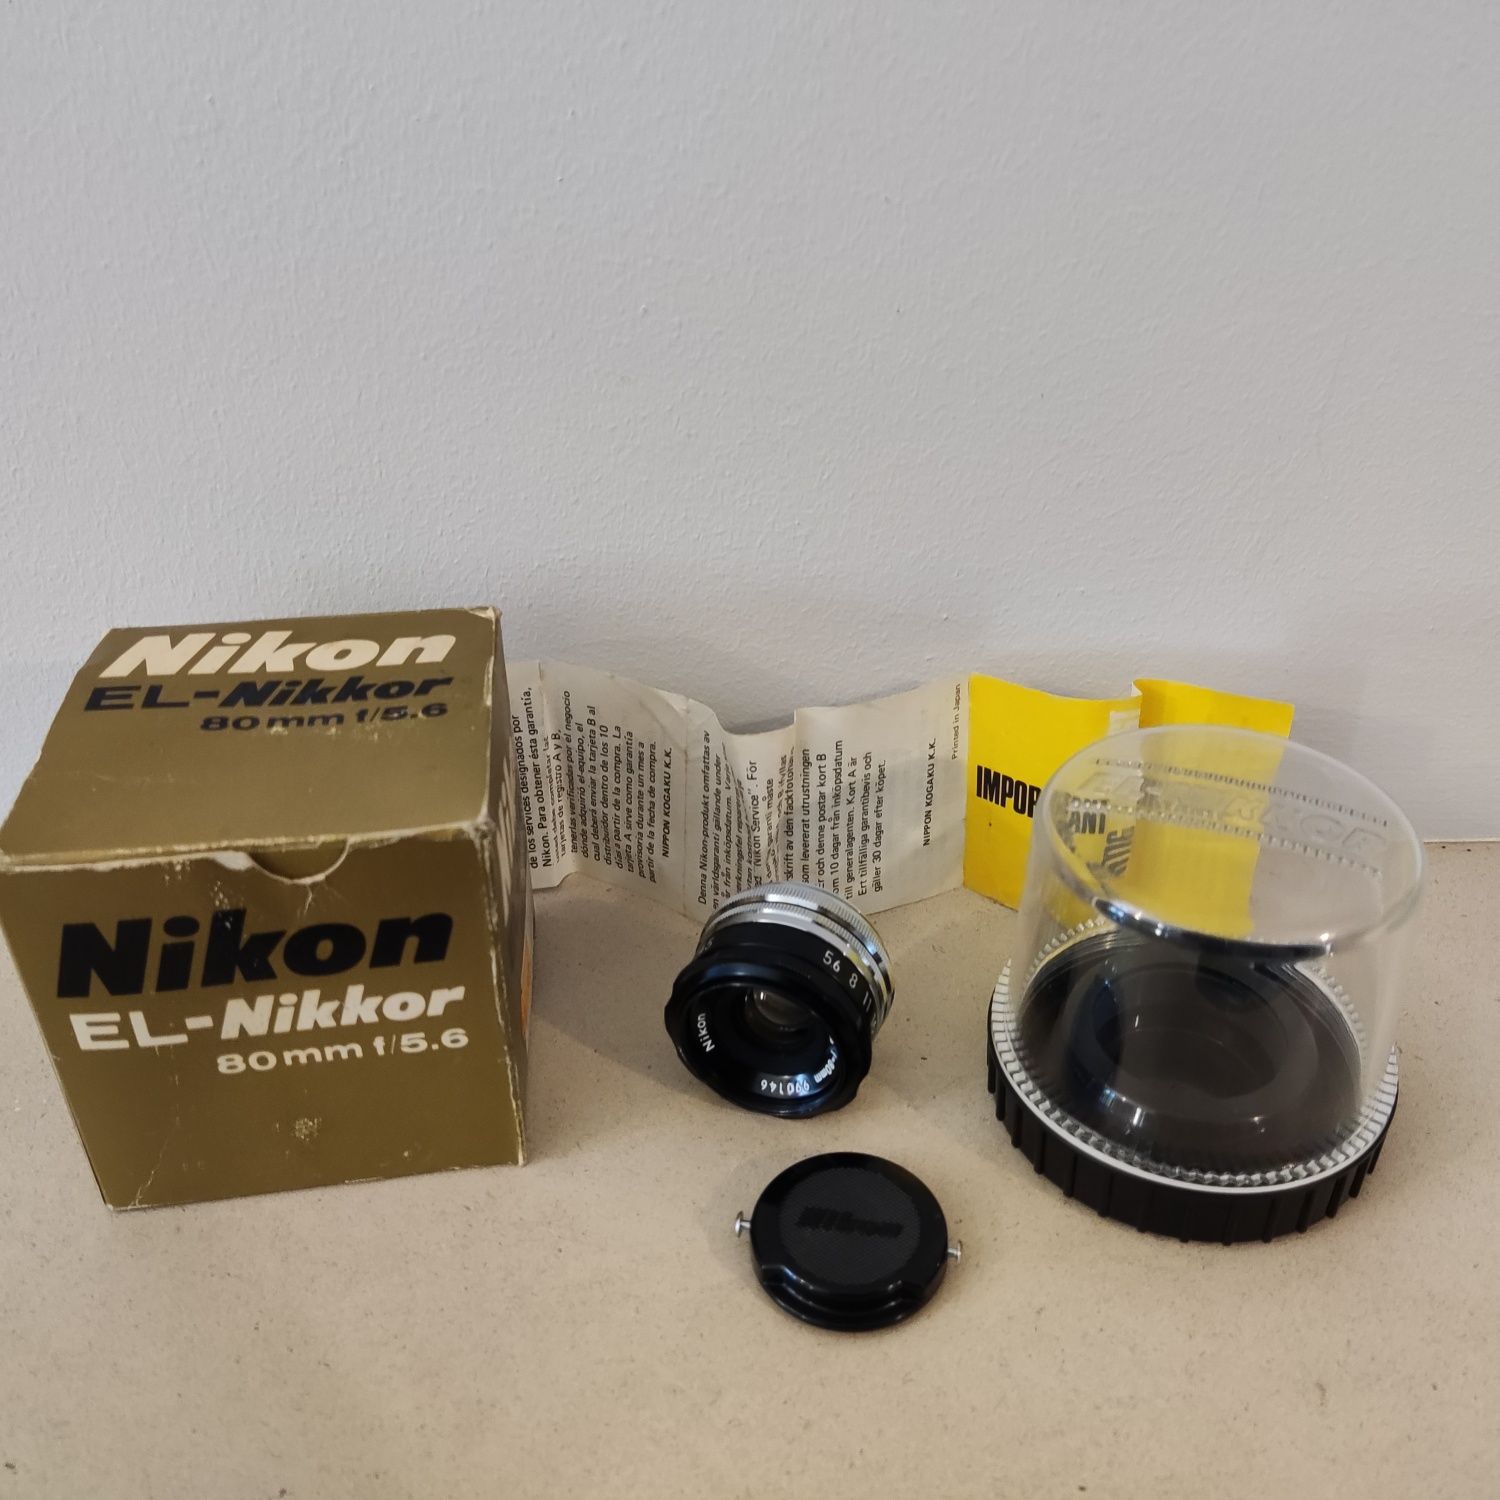 Lente Nikon EL-Nikkor 80mm 1:5.6 (Enlarging lens - ampliação)